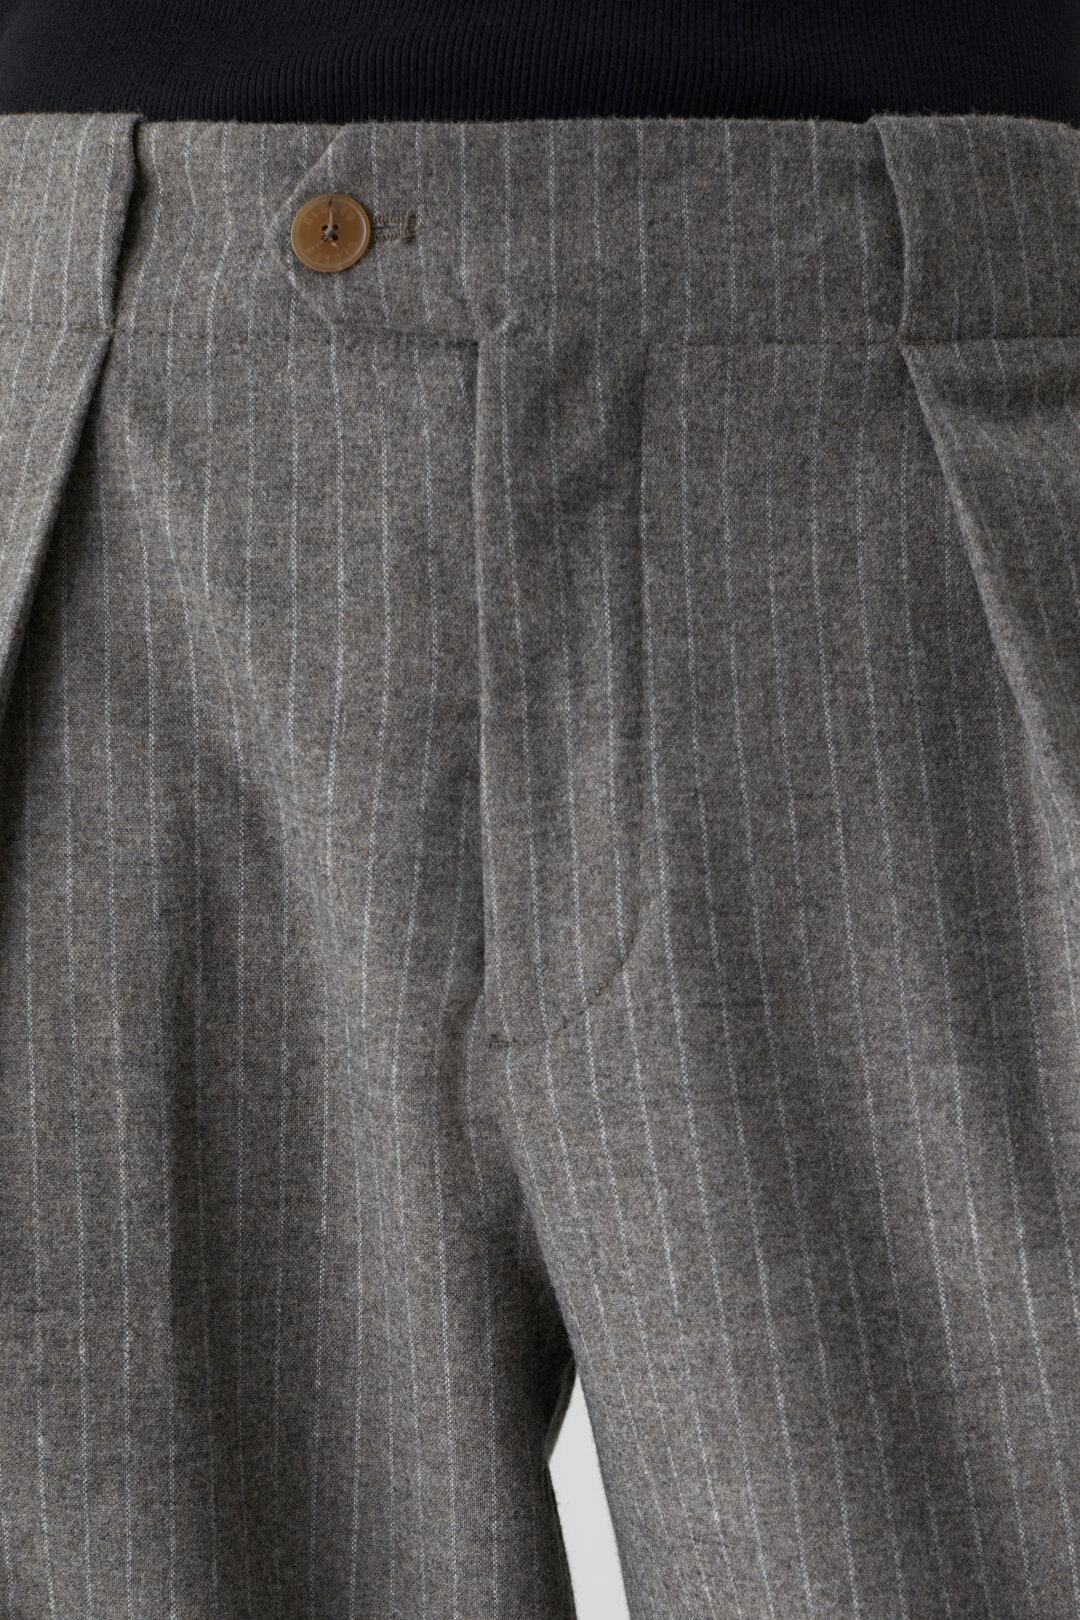 CLOSED Mawson Wool Trouser in Grey